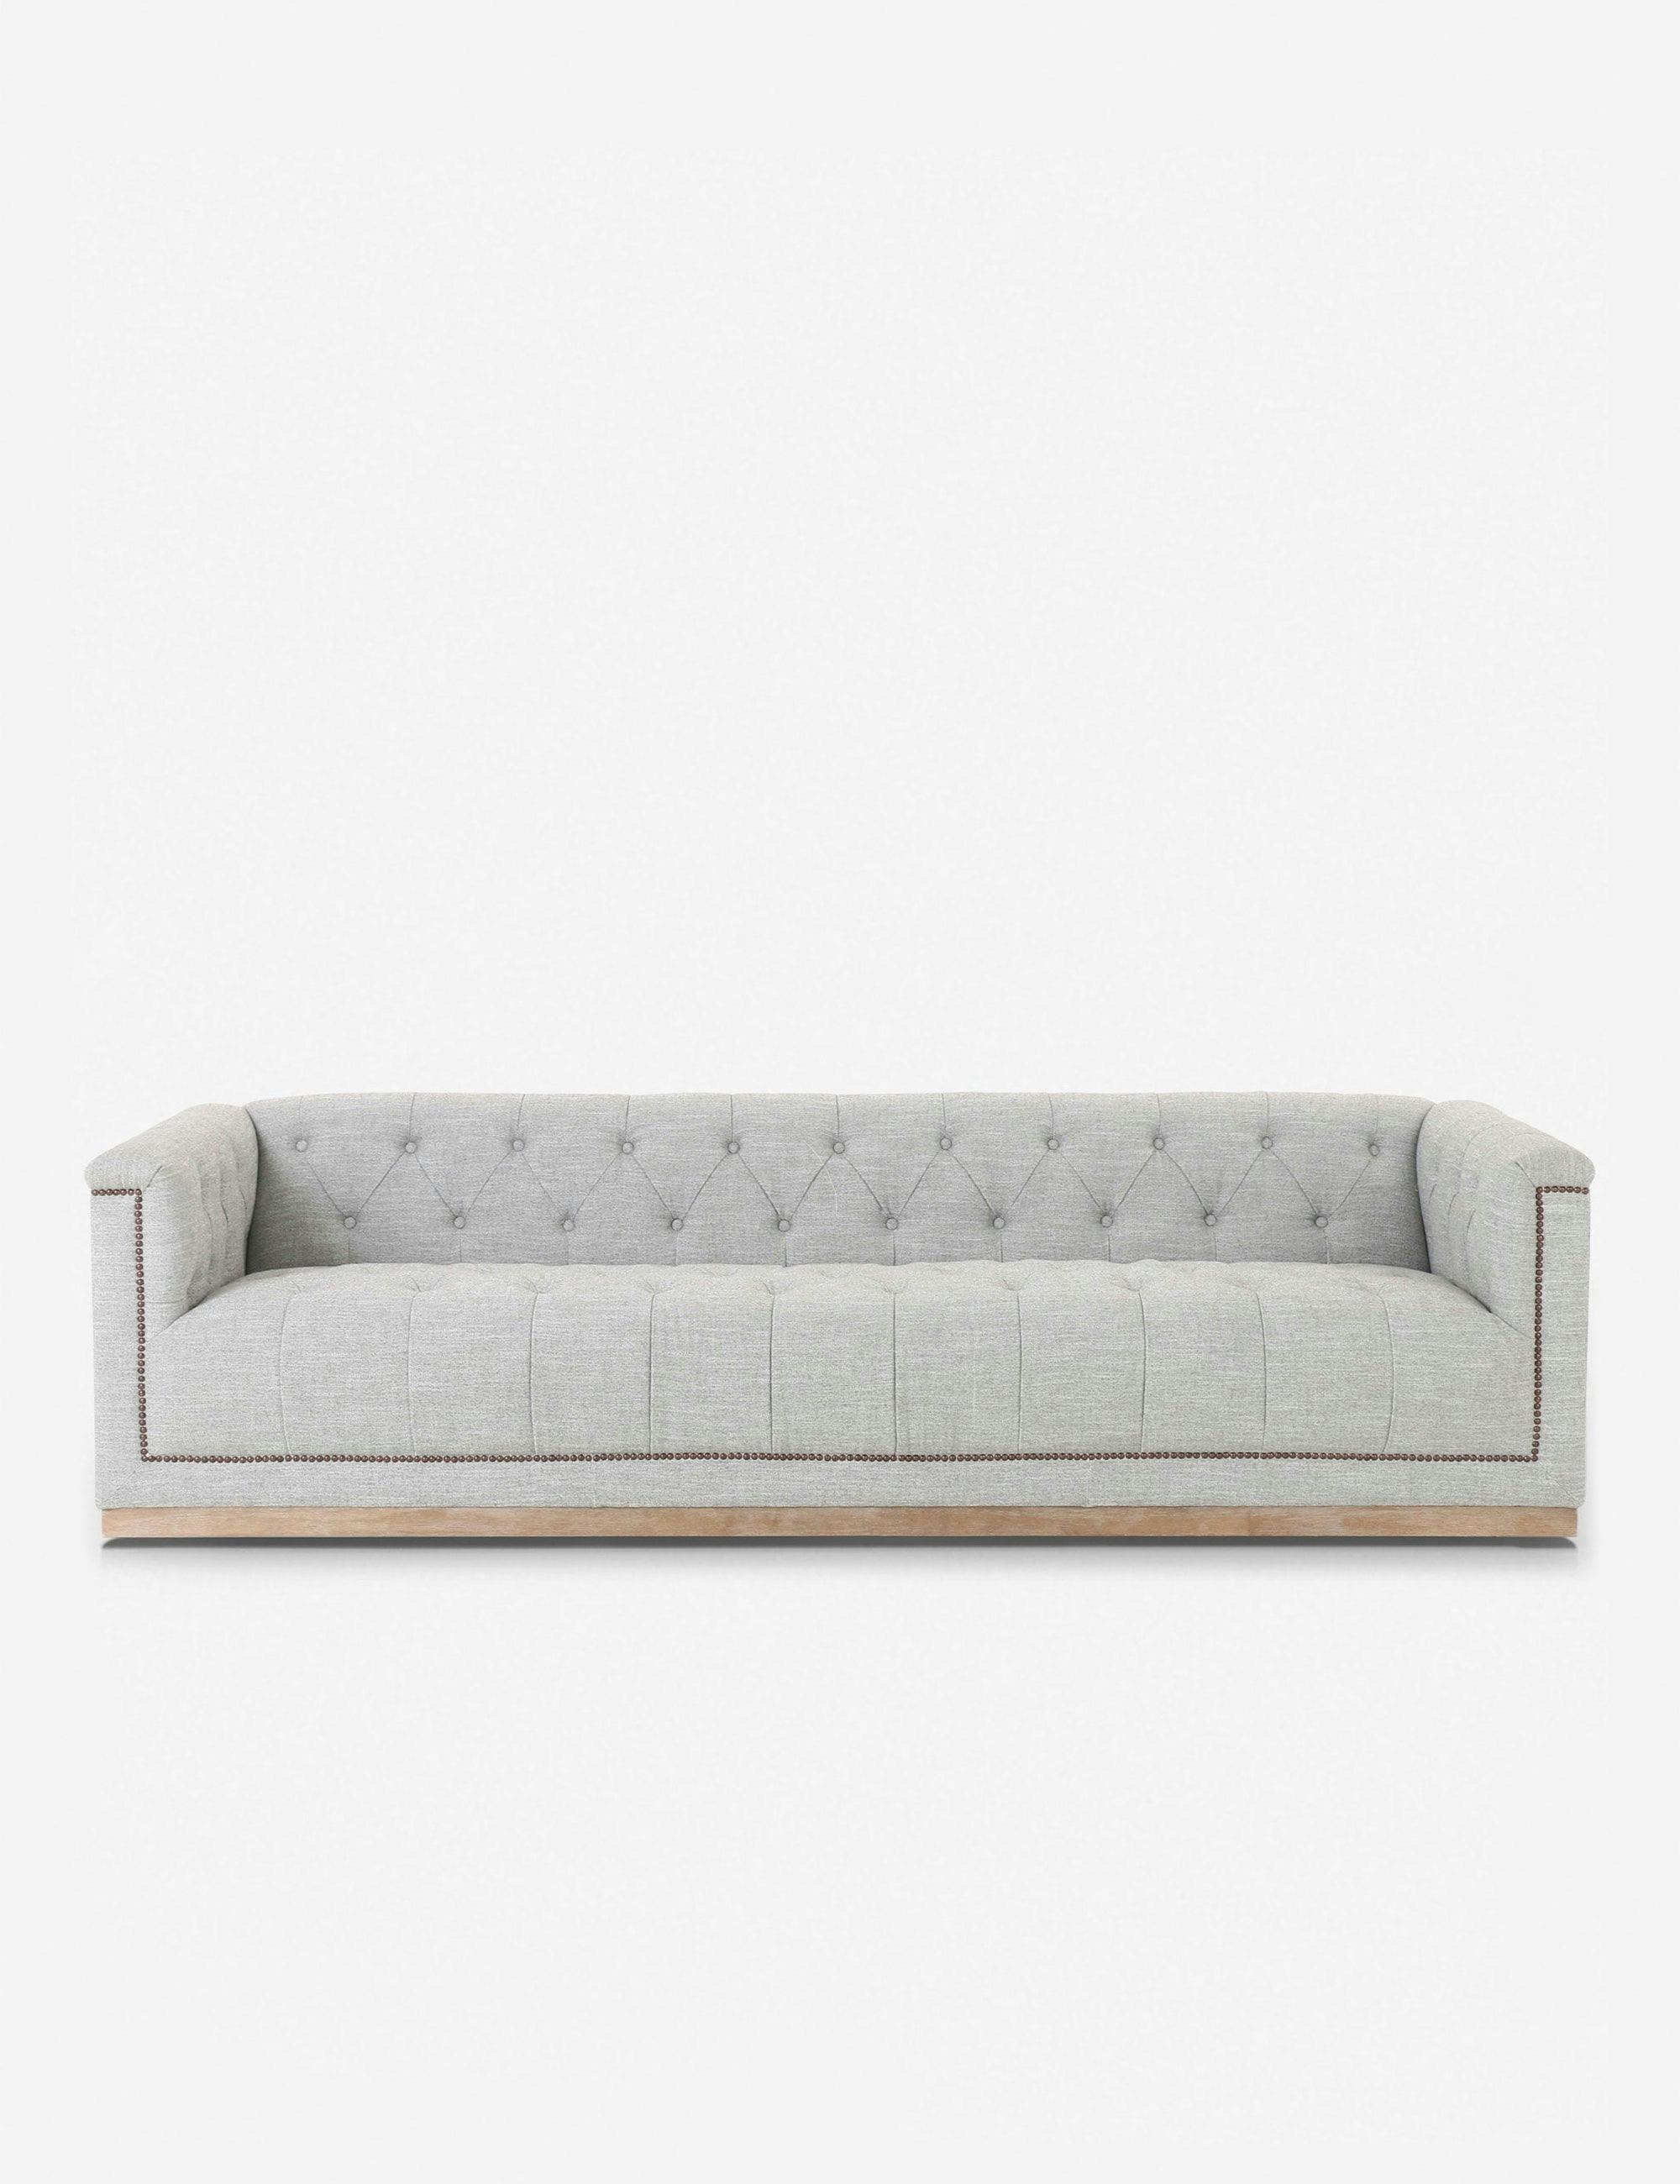 Leandra 95" Manor Gray Upholstered Tufted Sofa